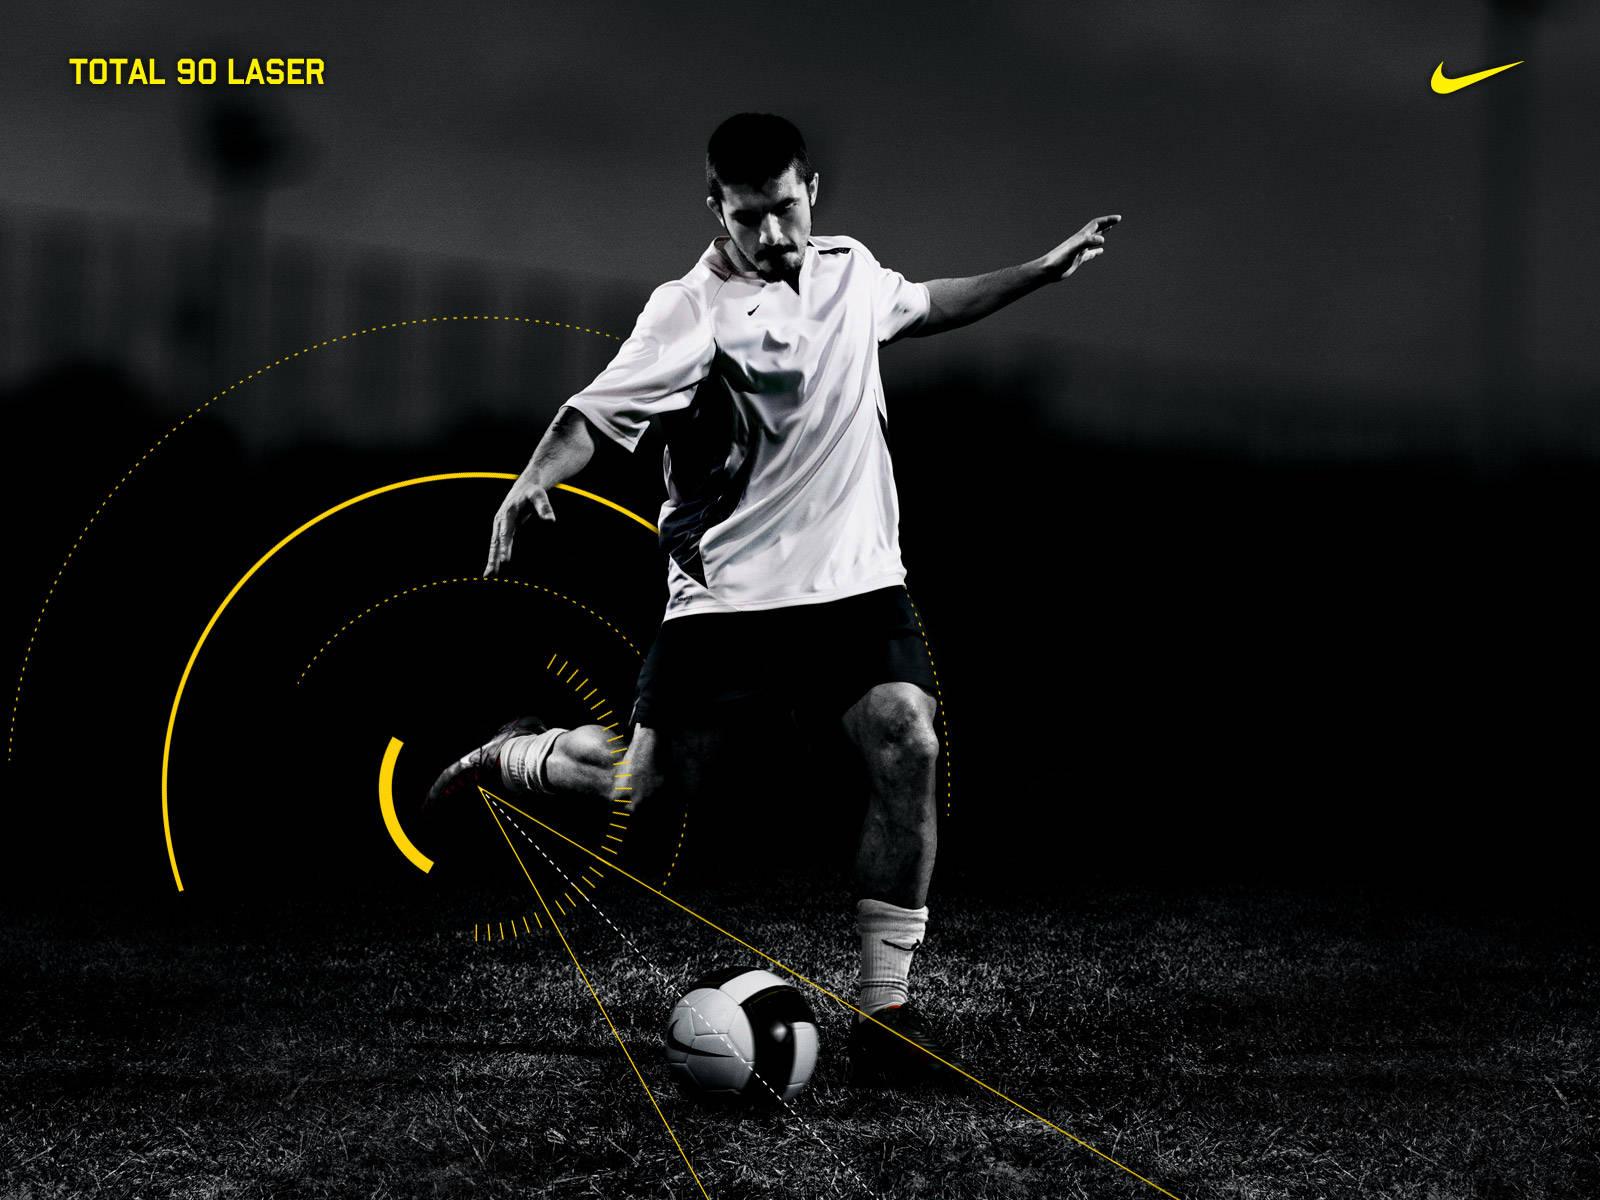 Soccer Wallpaper, 38 Soccer Image and Wallpaper for Mac, PC